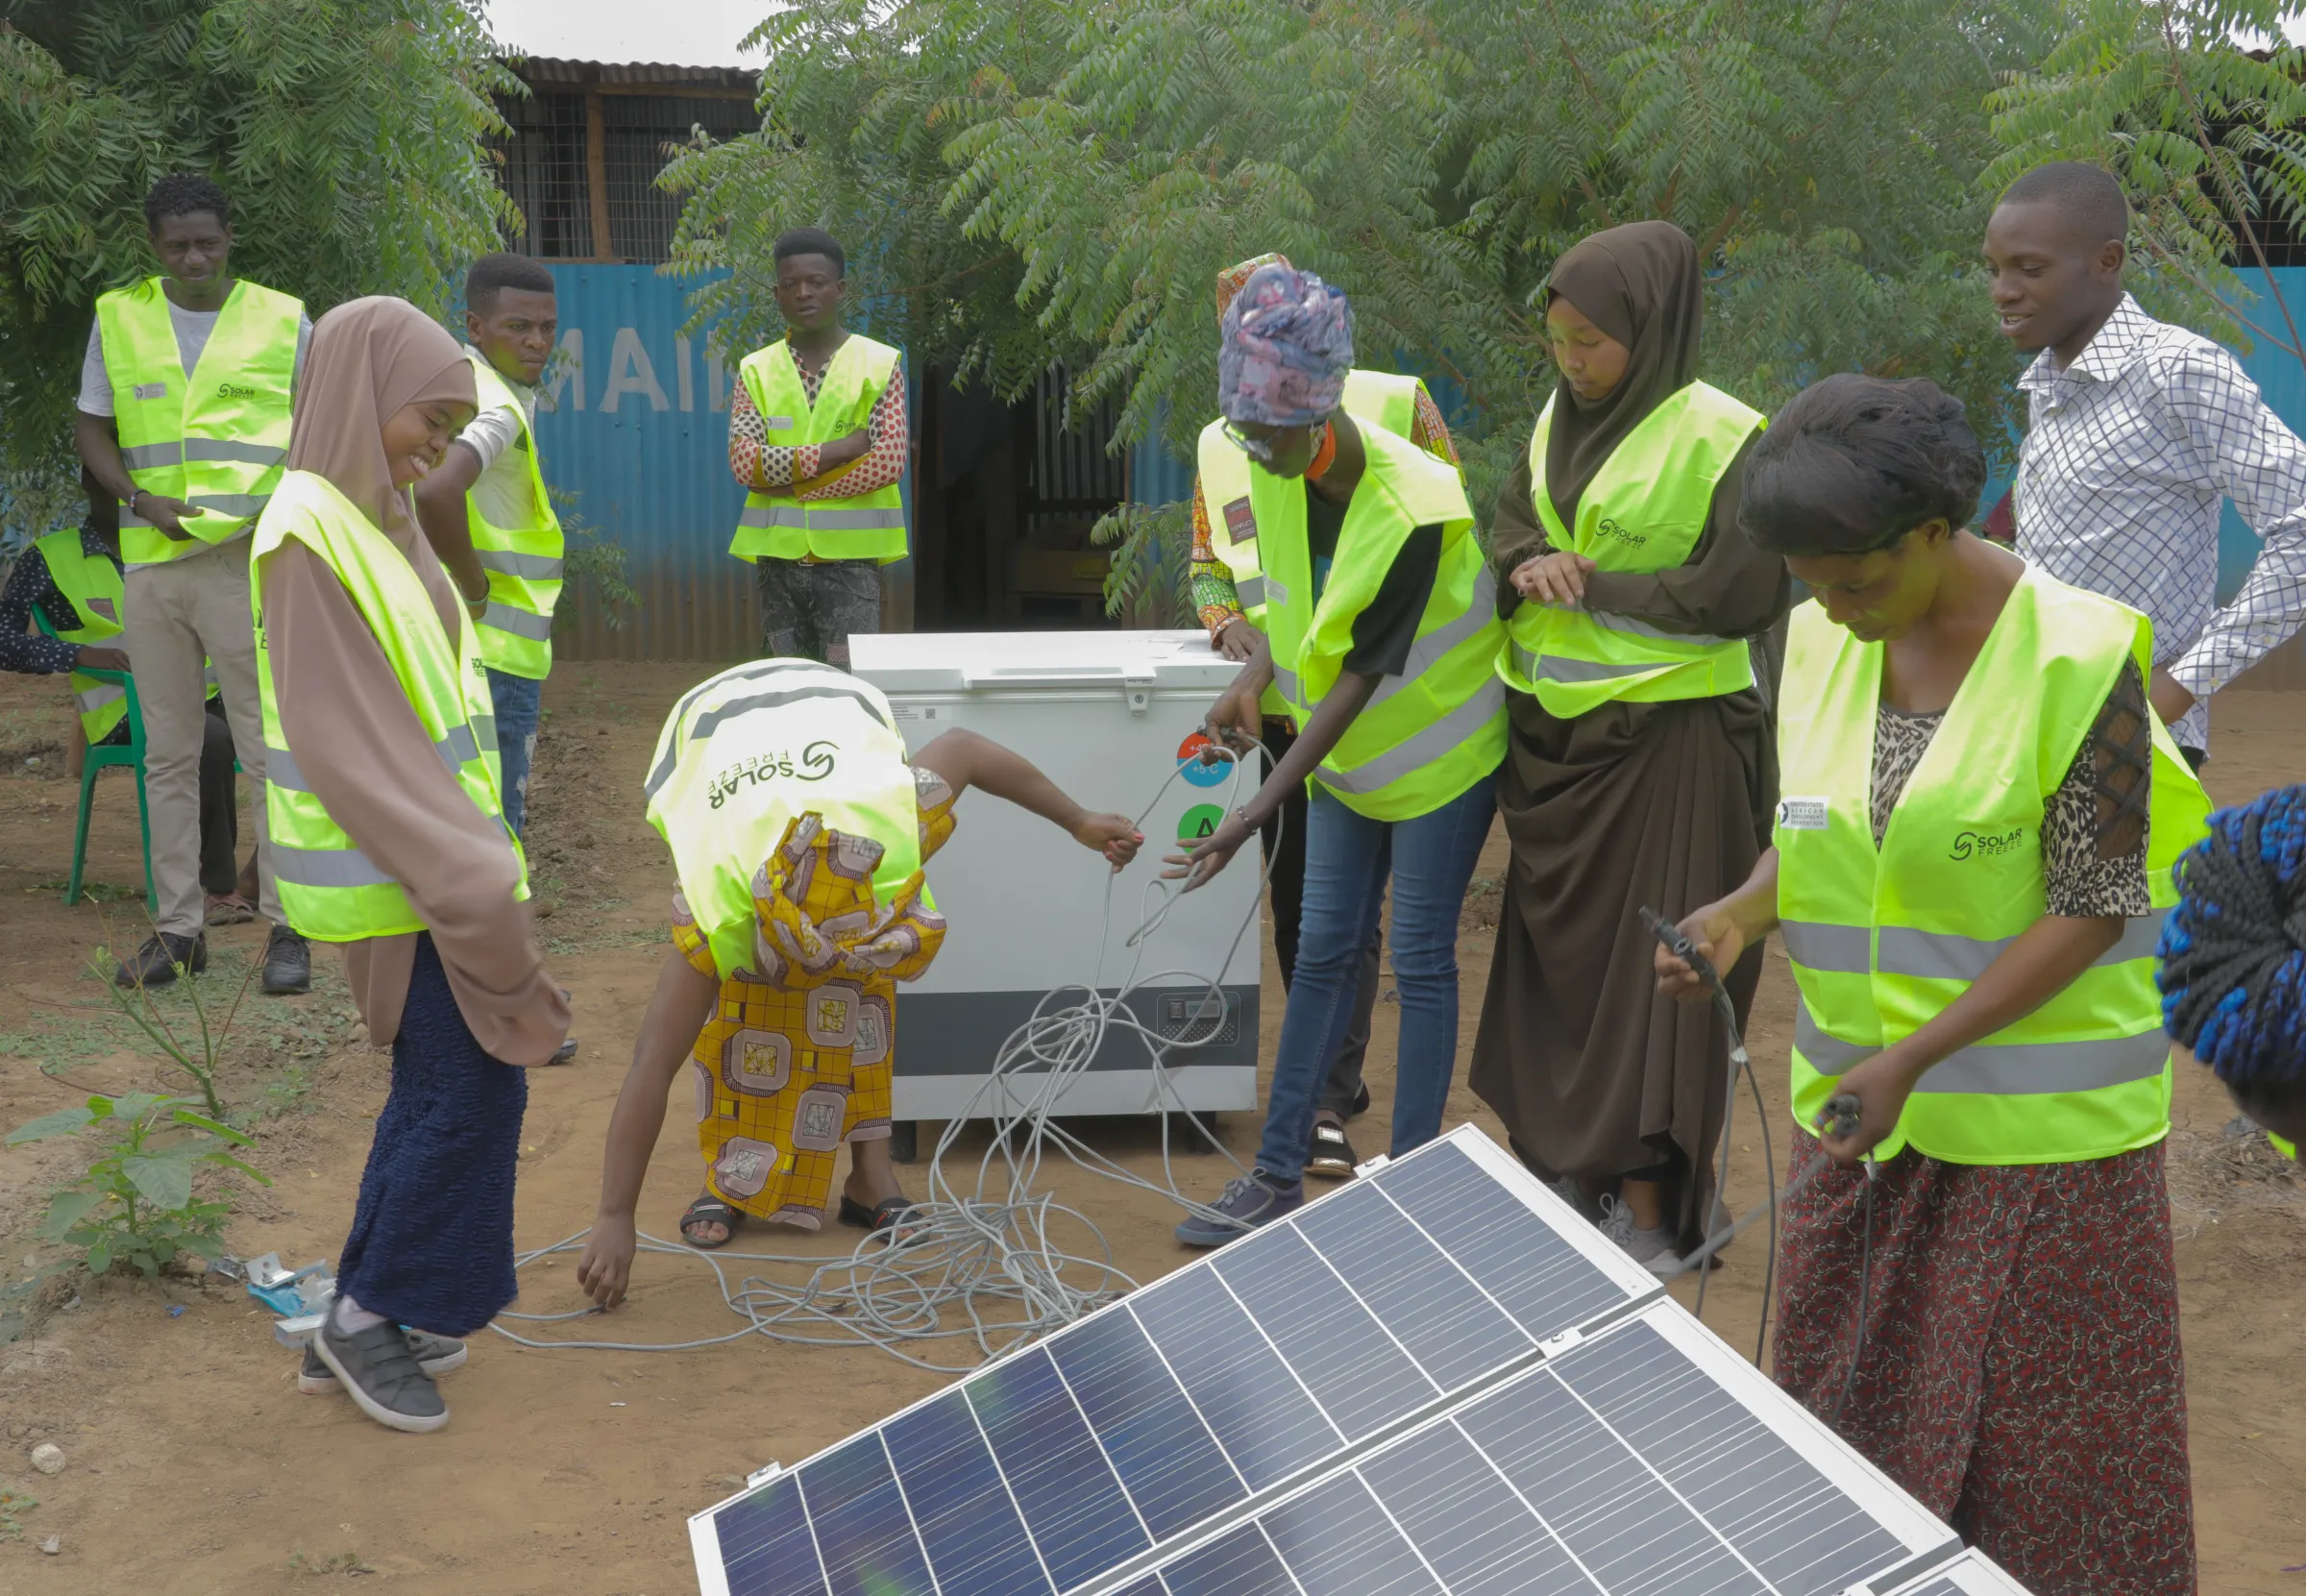 People in high-viz jackets assemble a solar-powered freezer